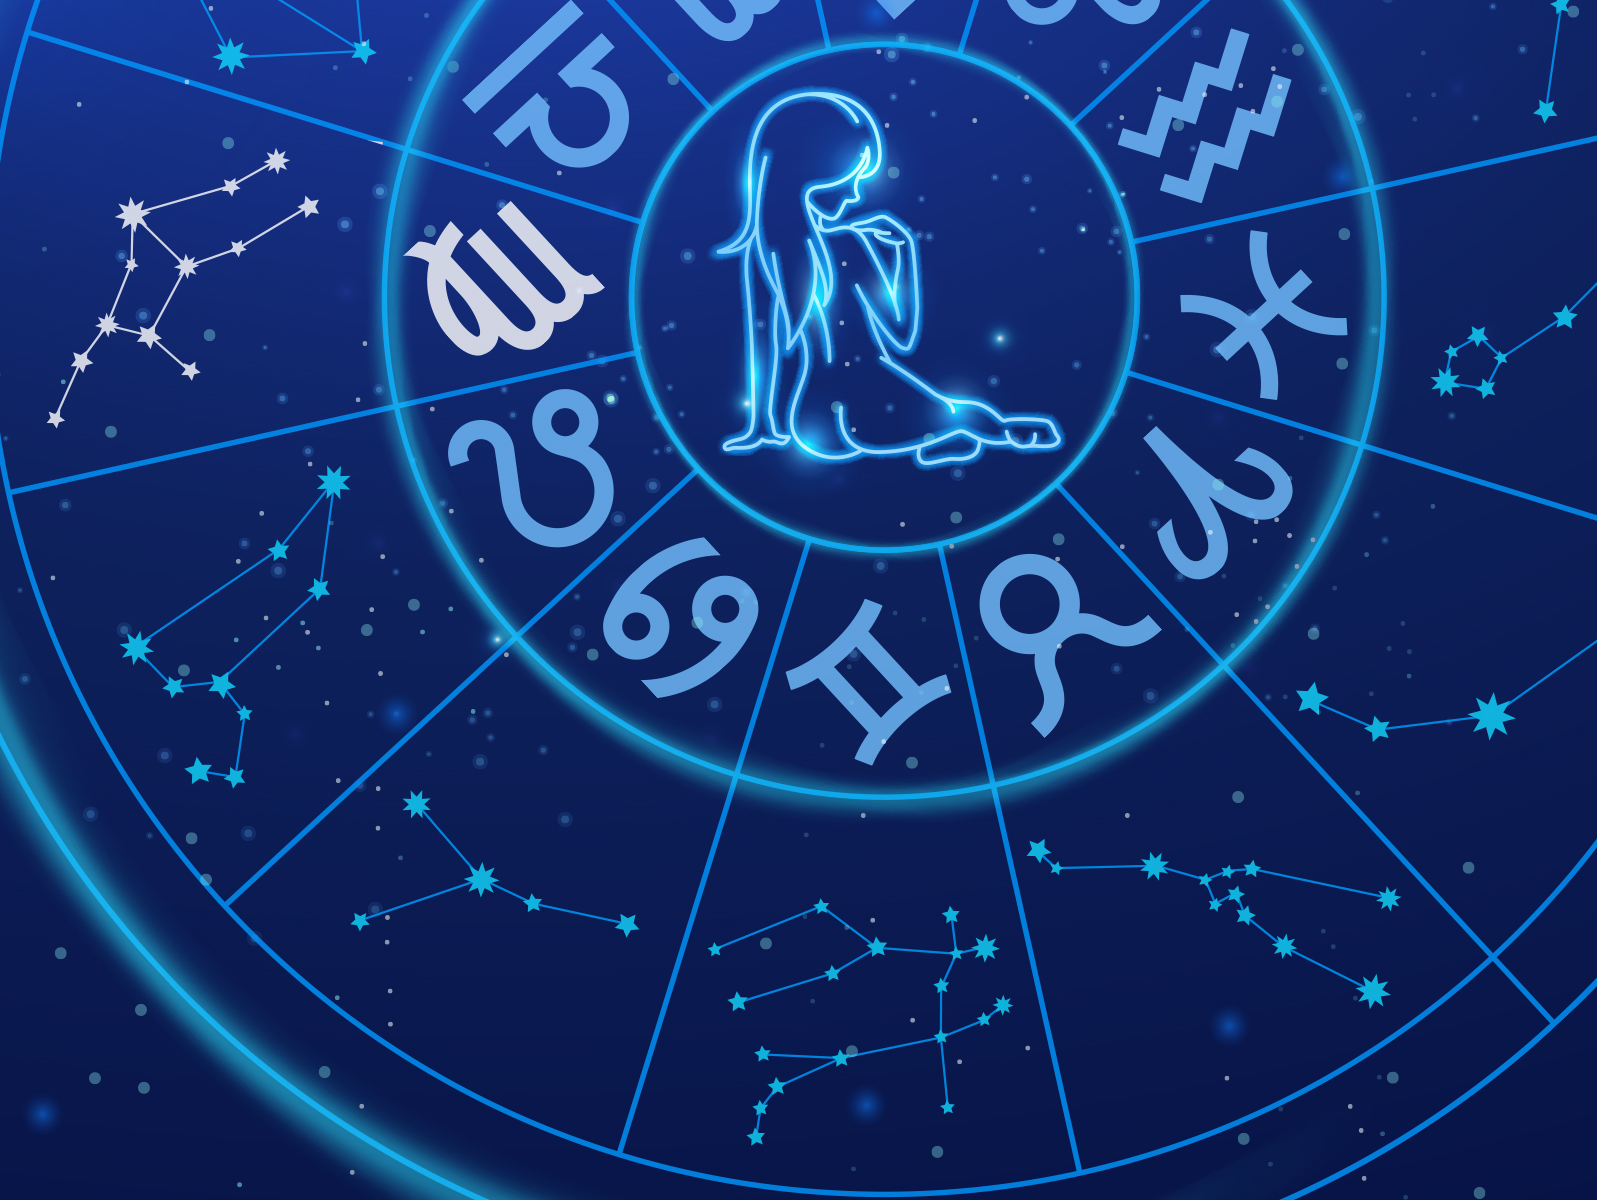 August 25th Birthday - Zodiac Sign